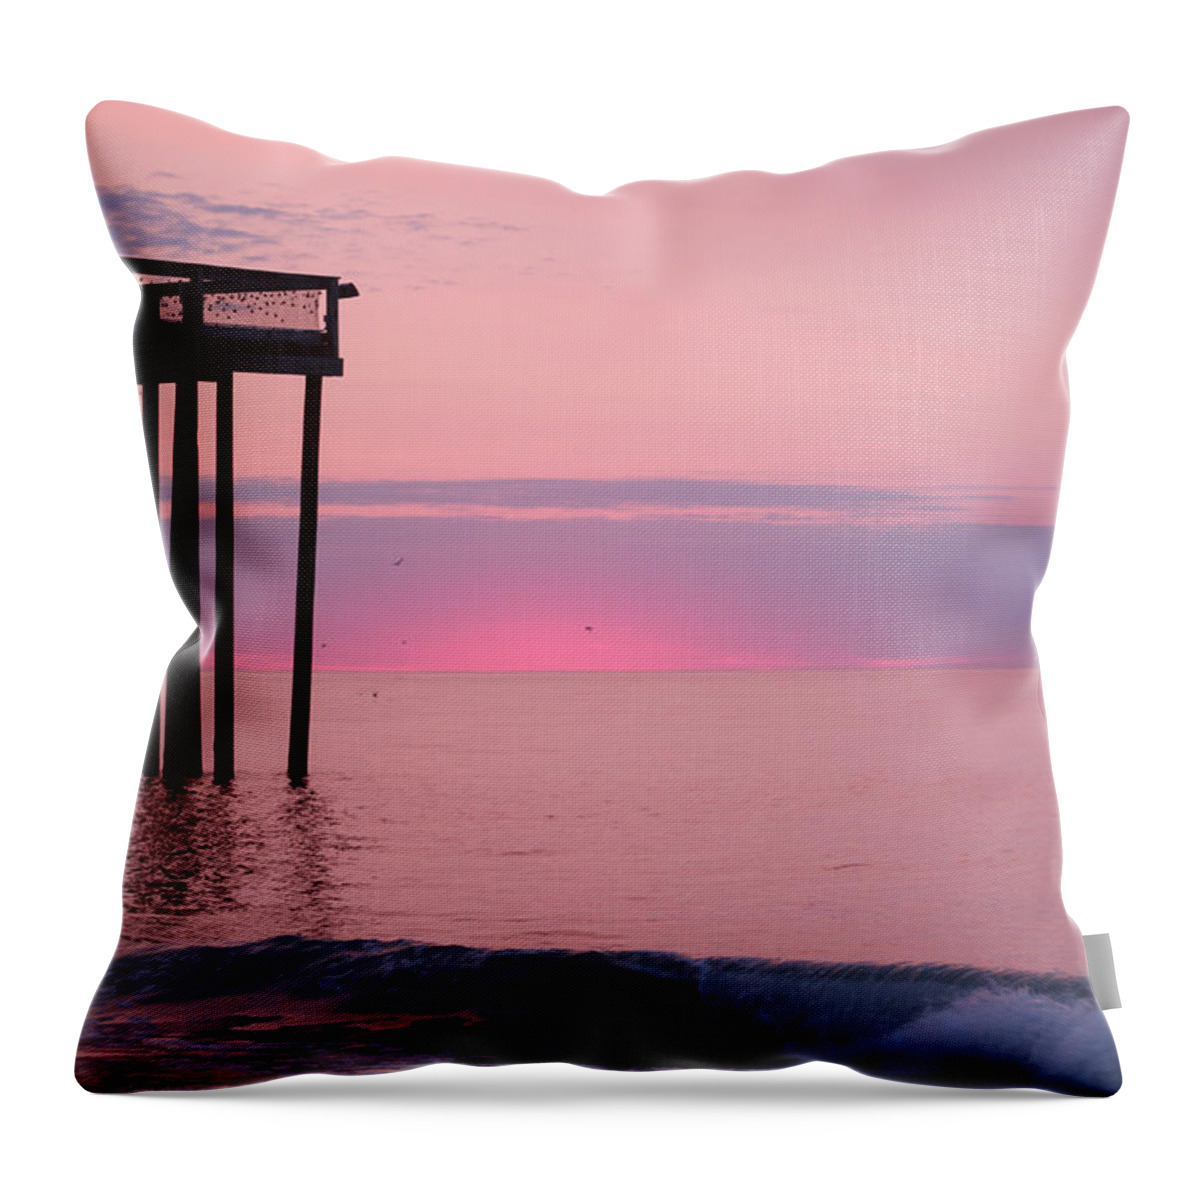 Dawn Throw Pillow featuring the photograph Pink Dawn At The Pier by Robert Banach